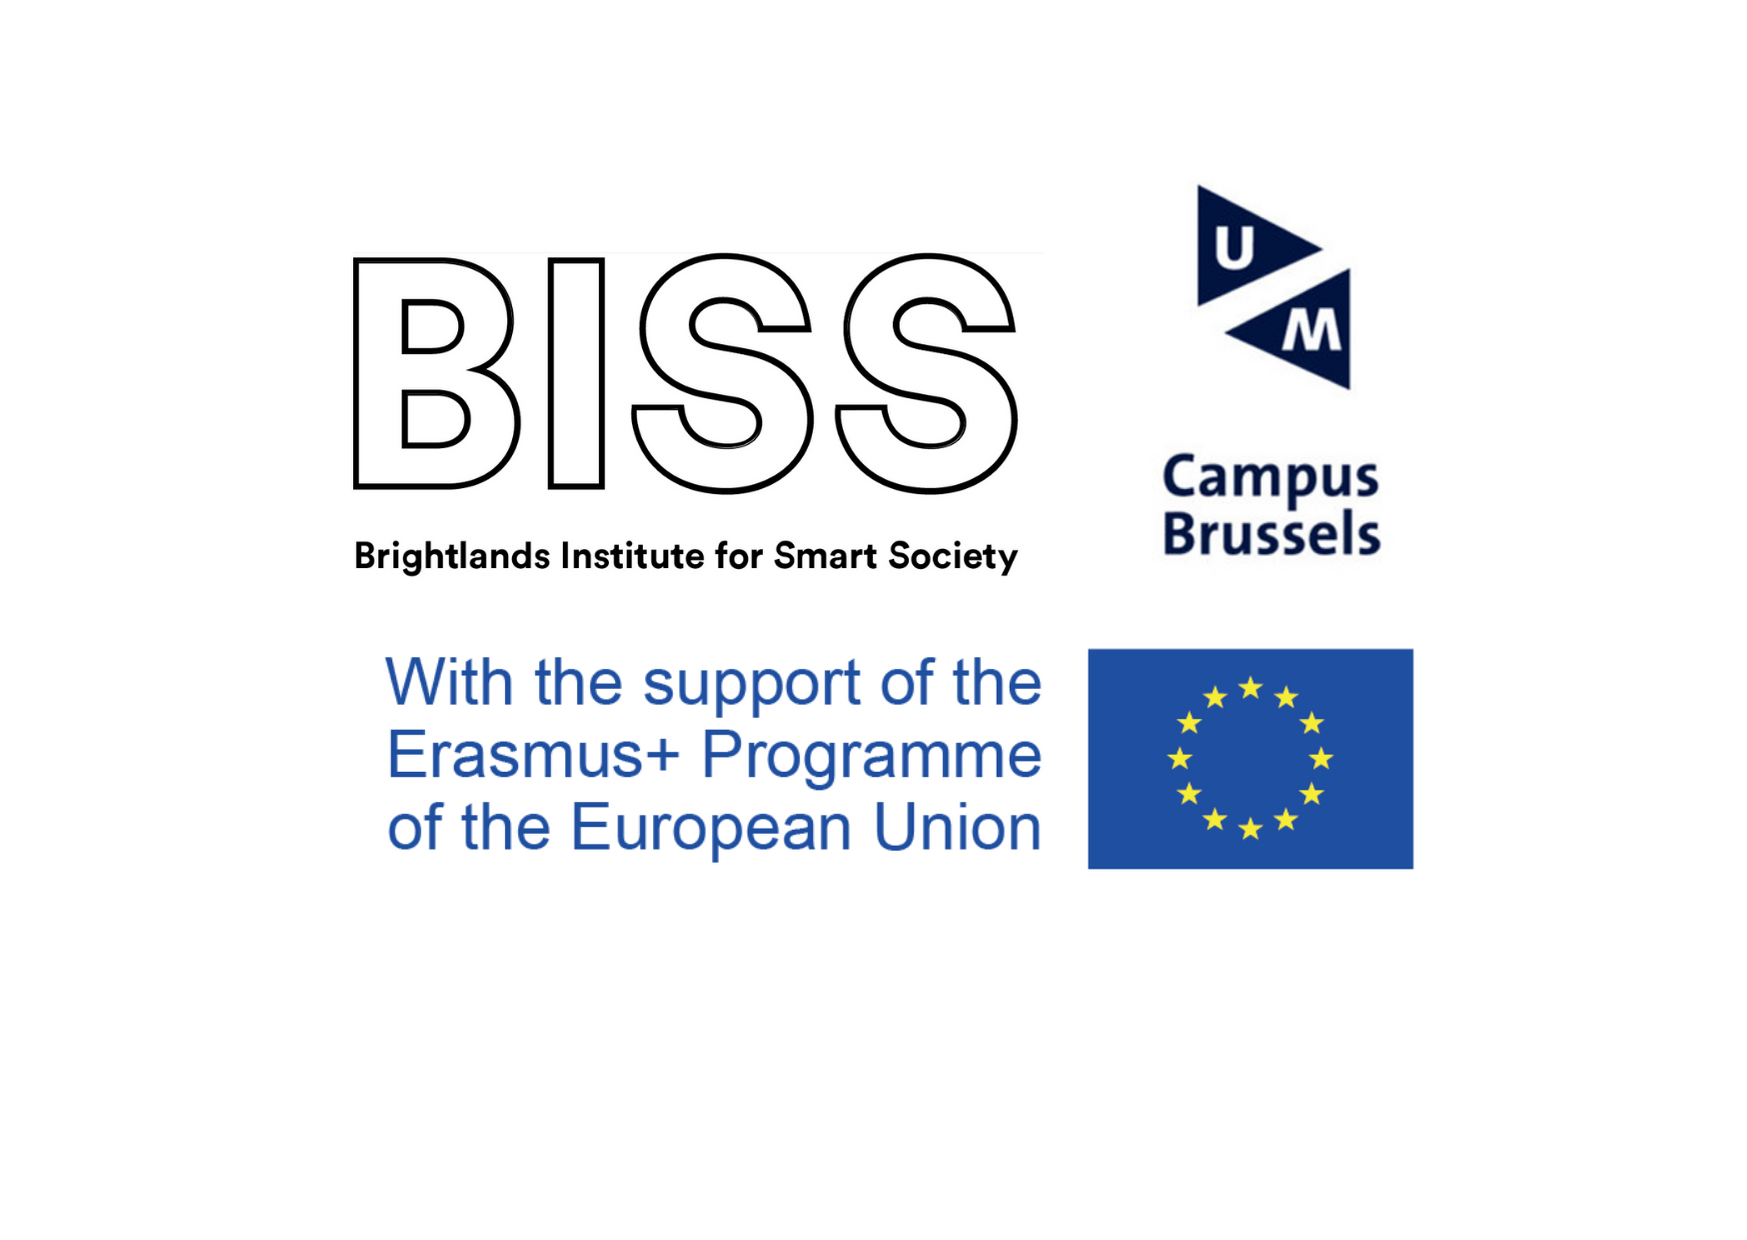 Logos BISS and UMCB